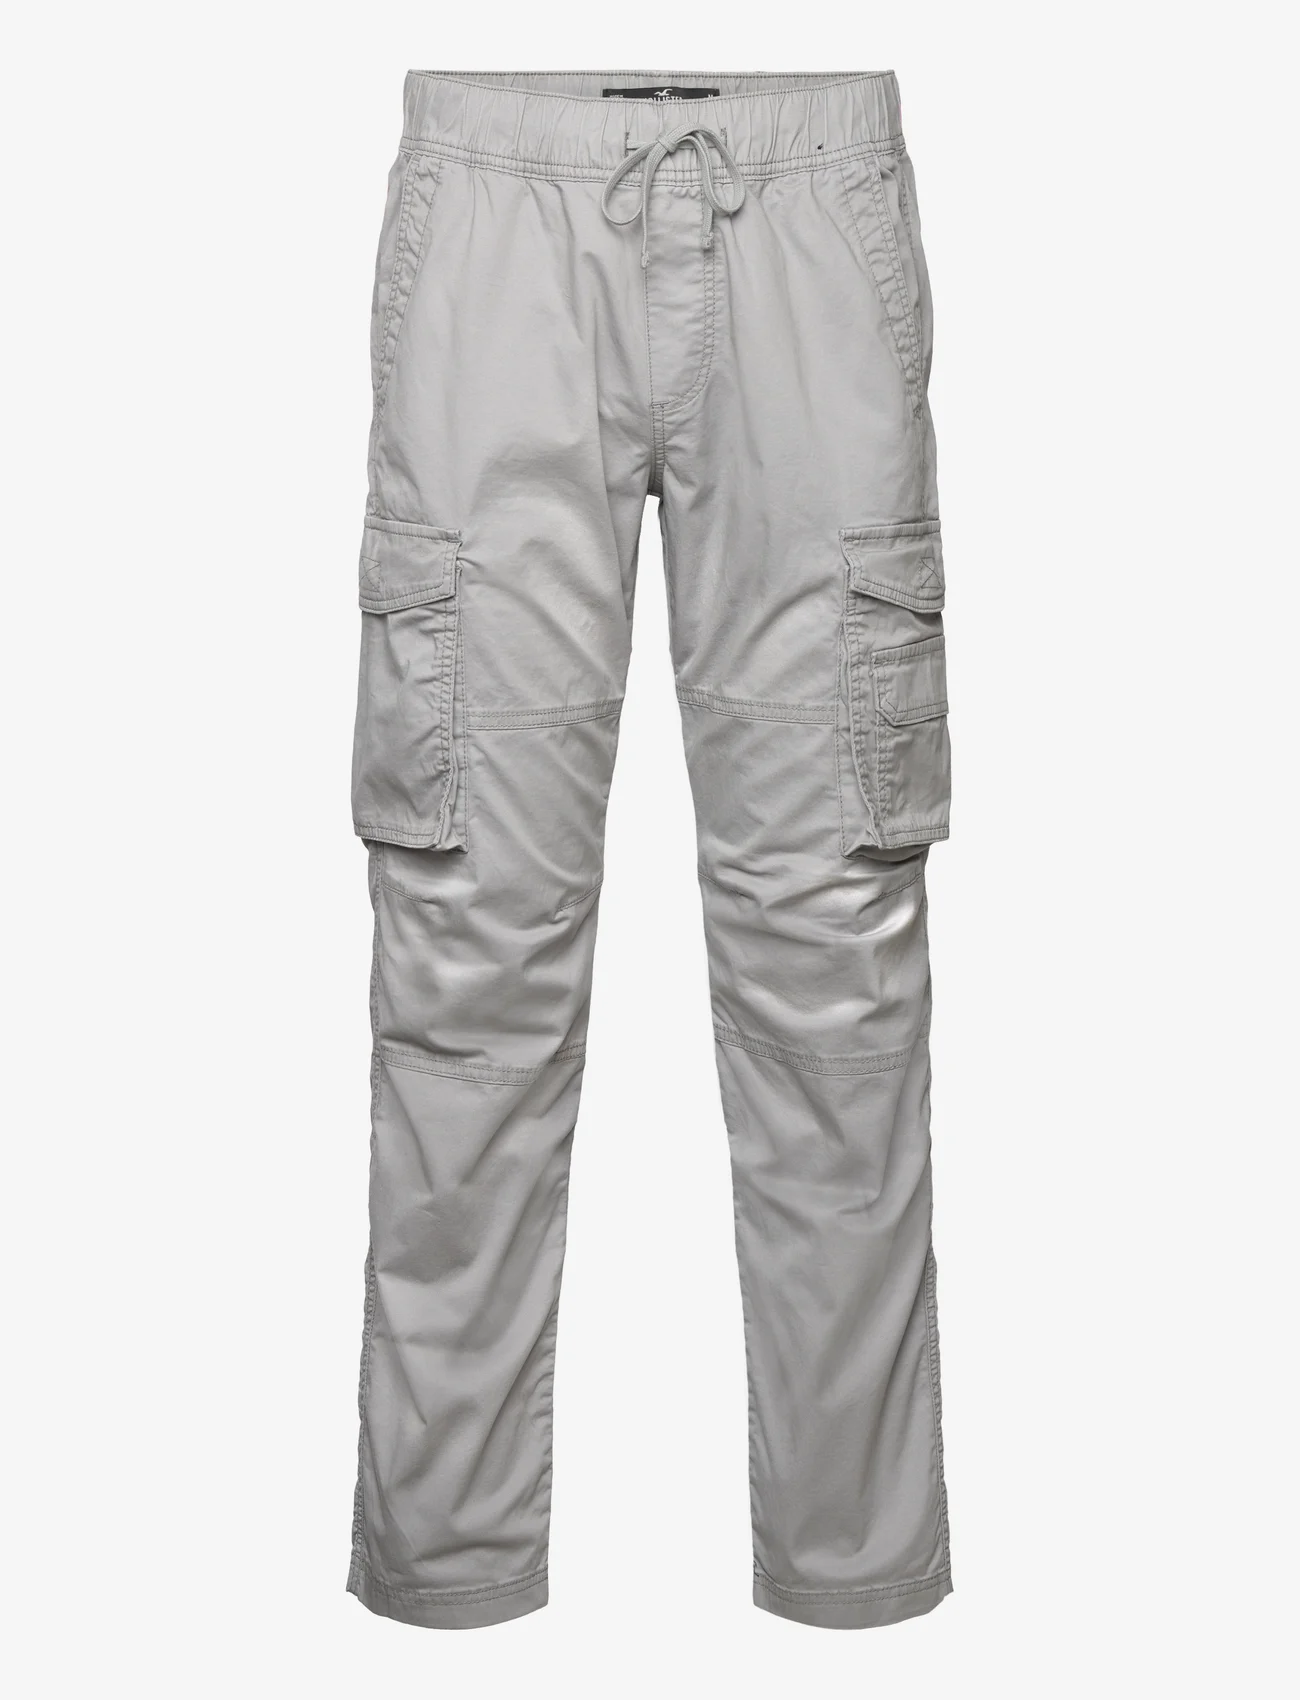 Hollister - HCo. GUYS PANTS - cargohose - ultimate grey - 0